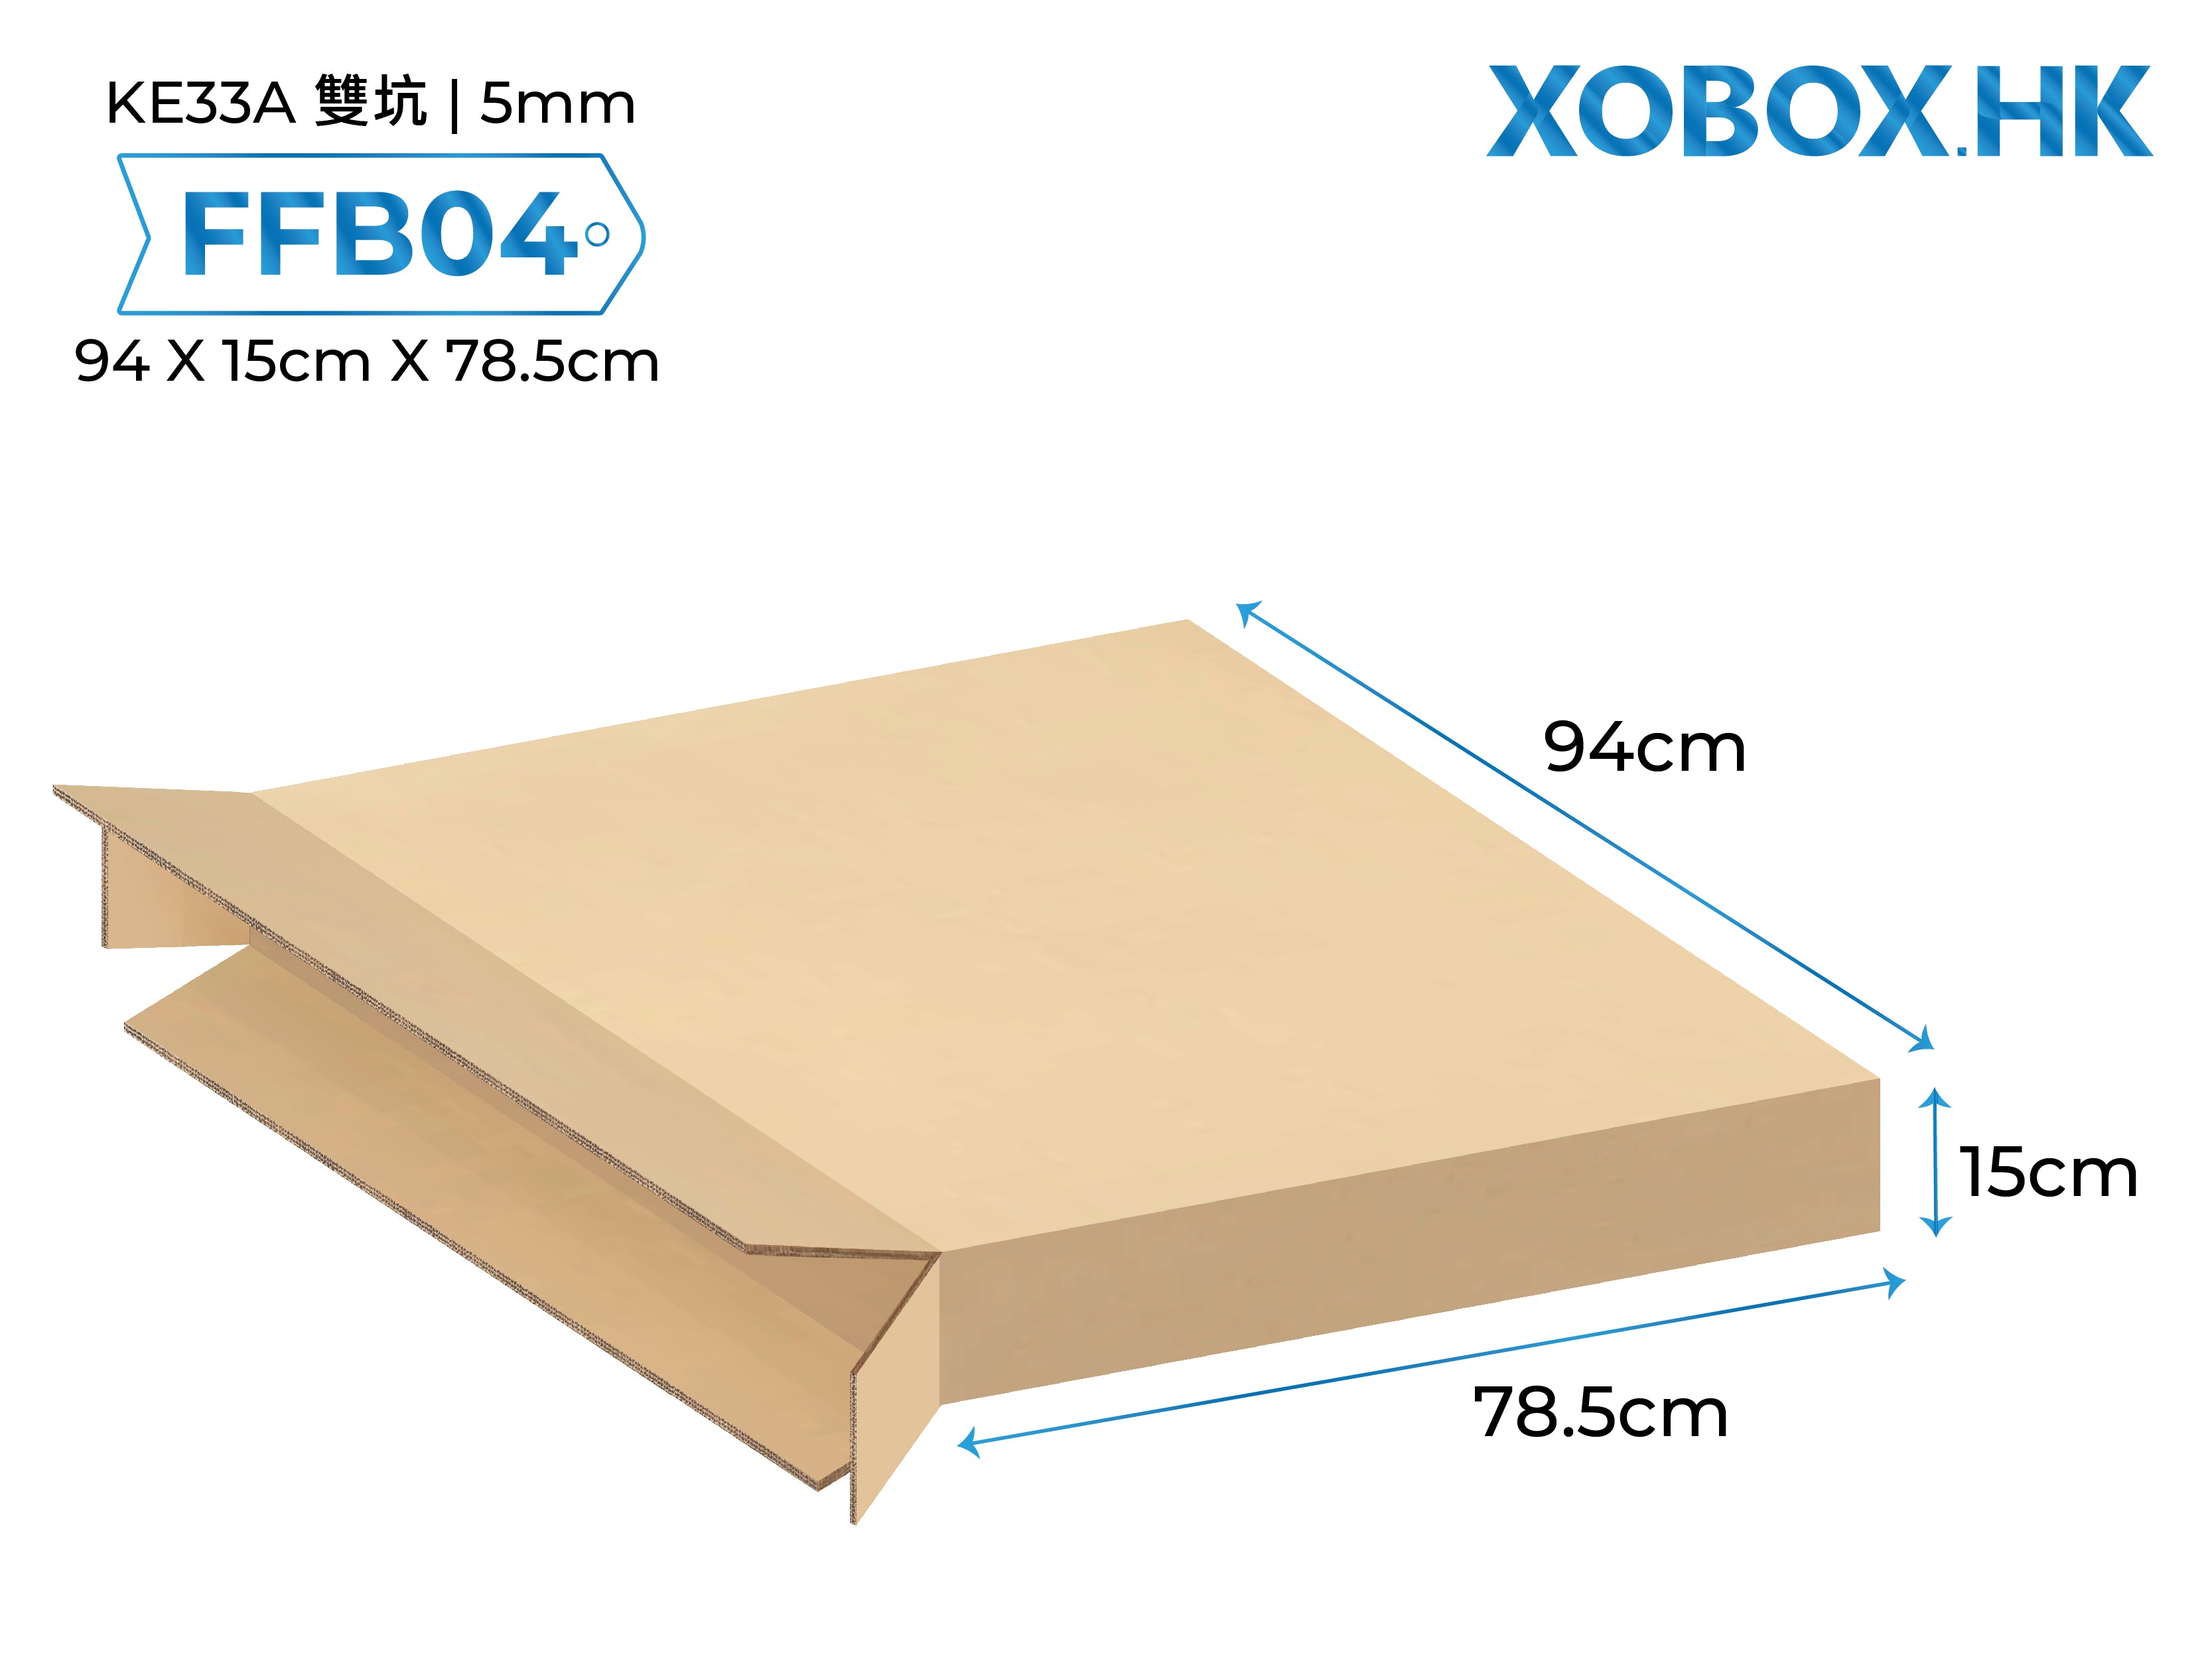 Full Flaps Box 覆翼紙箱– XOBOX.HK